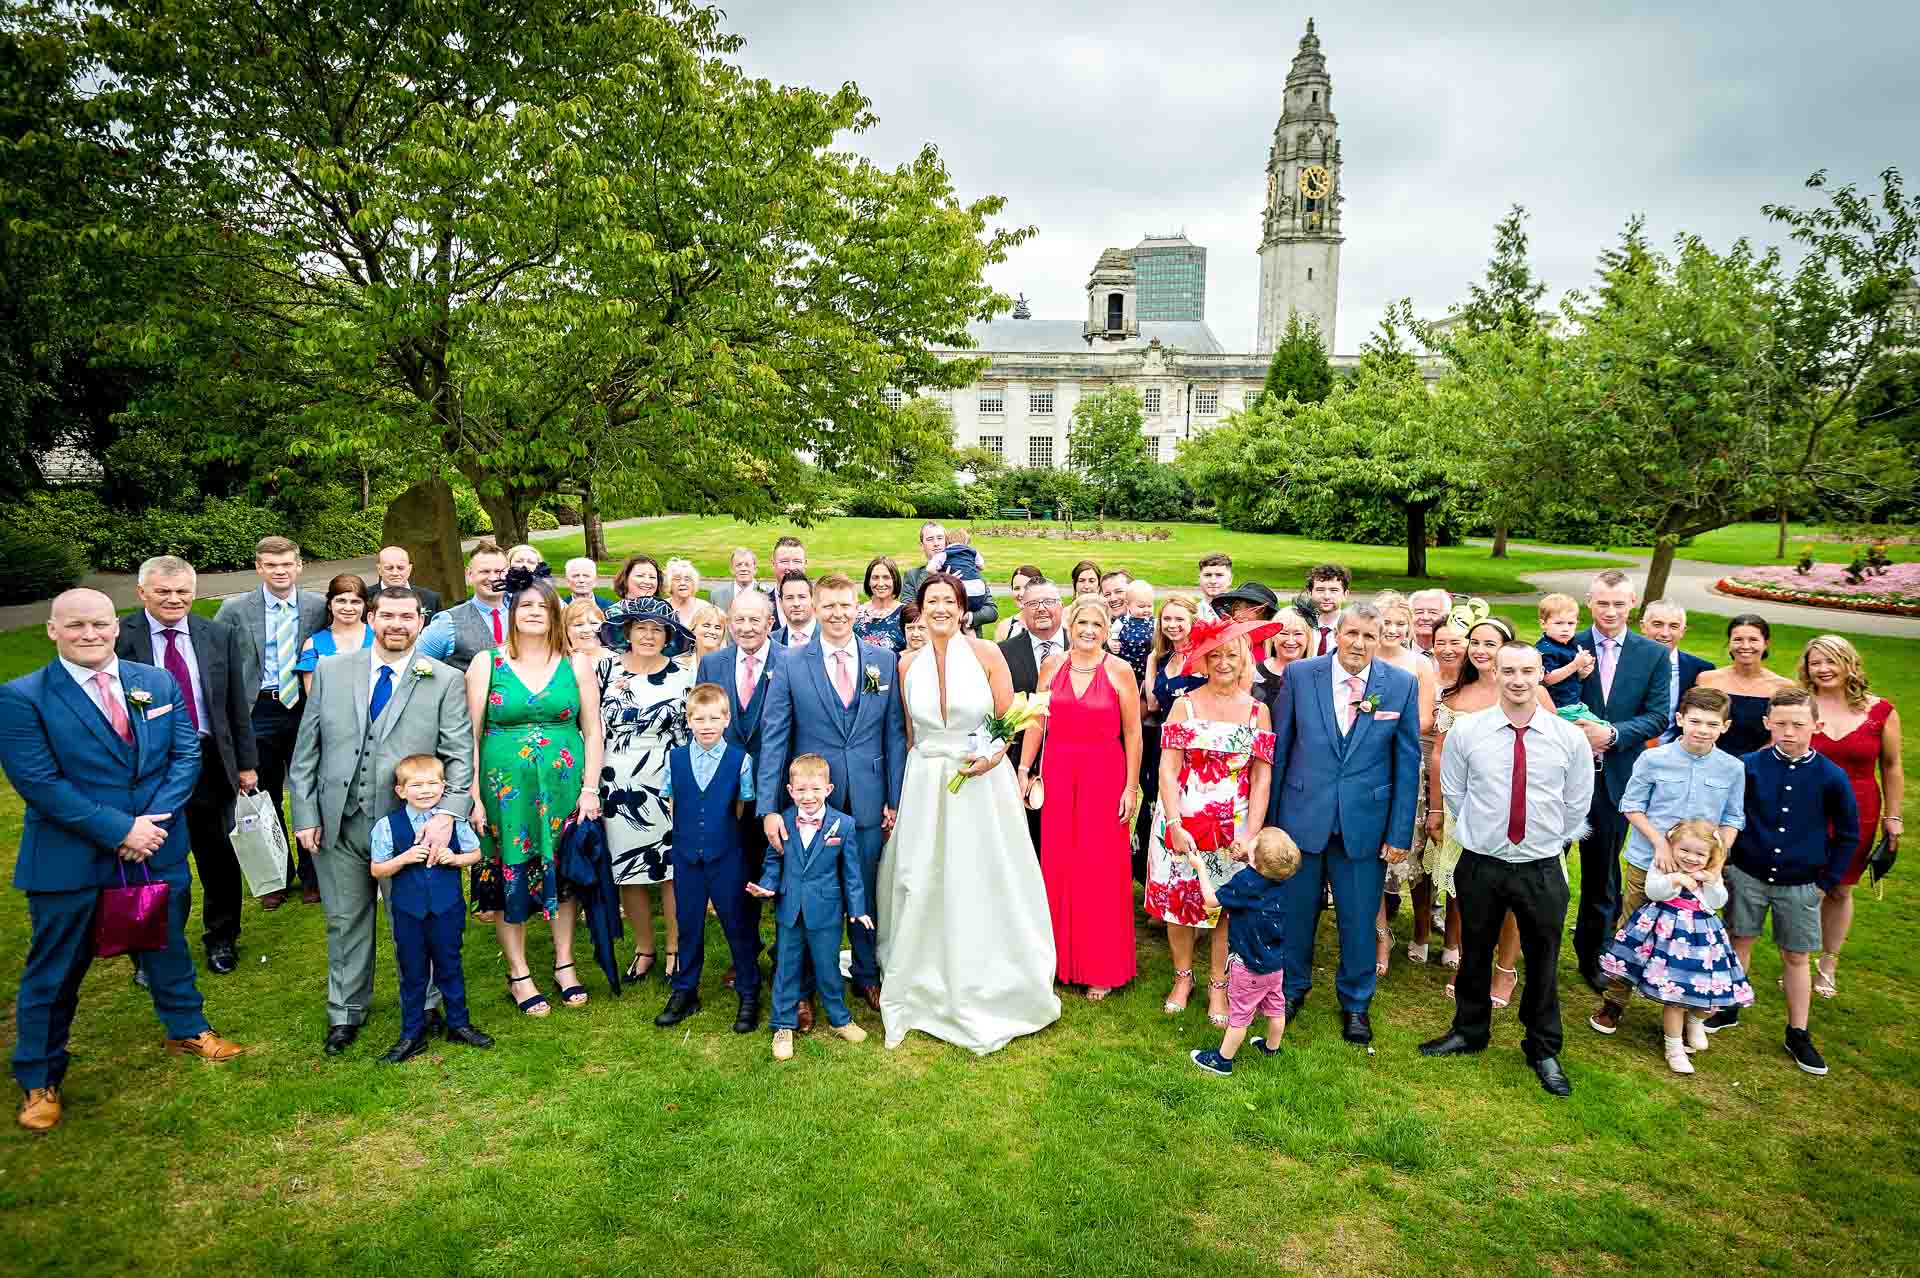 Group Wedding Photograph is Alexandra Gardens, Cardiff